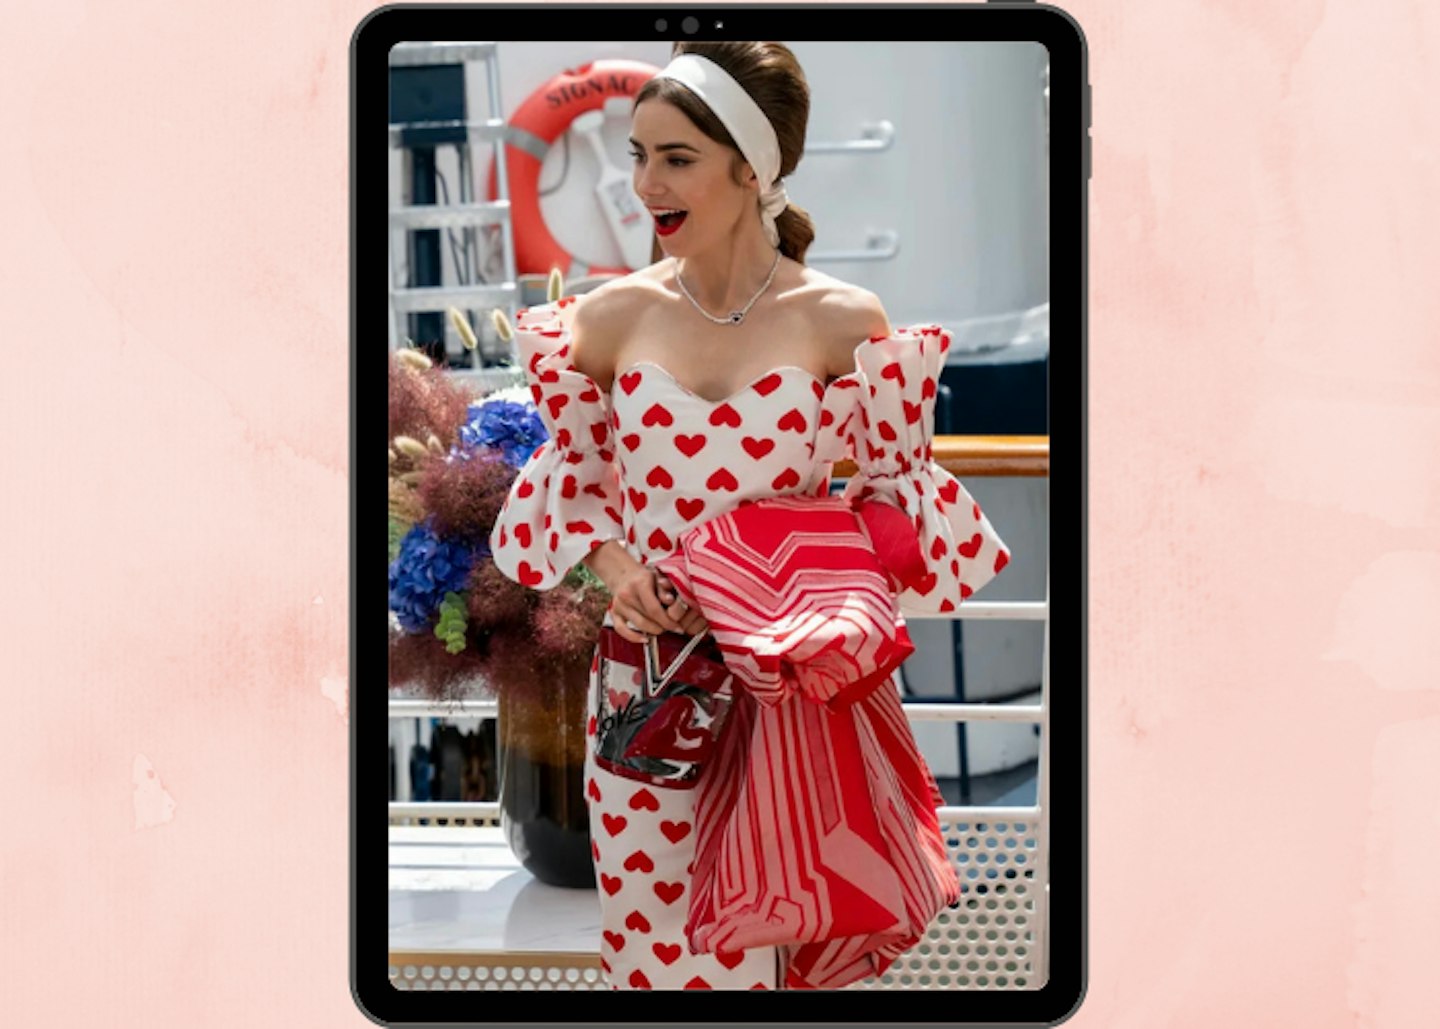 Emily in Paris Season 2 Episode 5 outfit heart dress